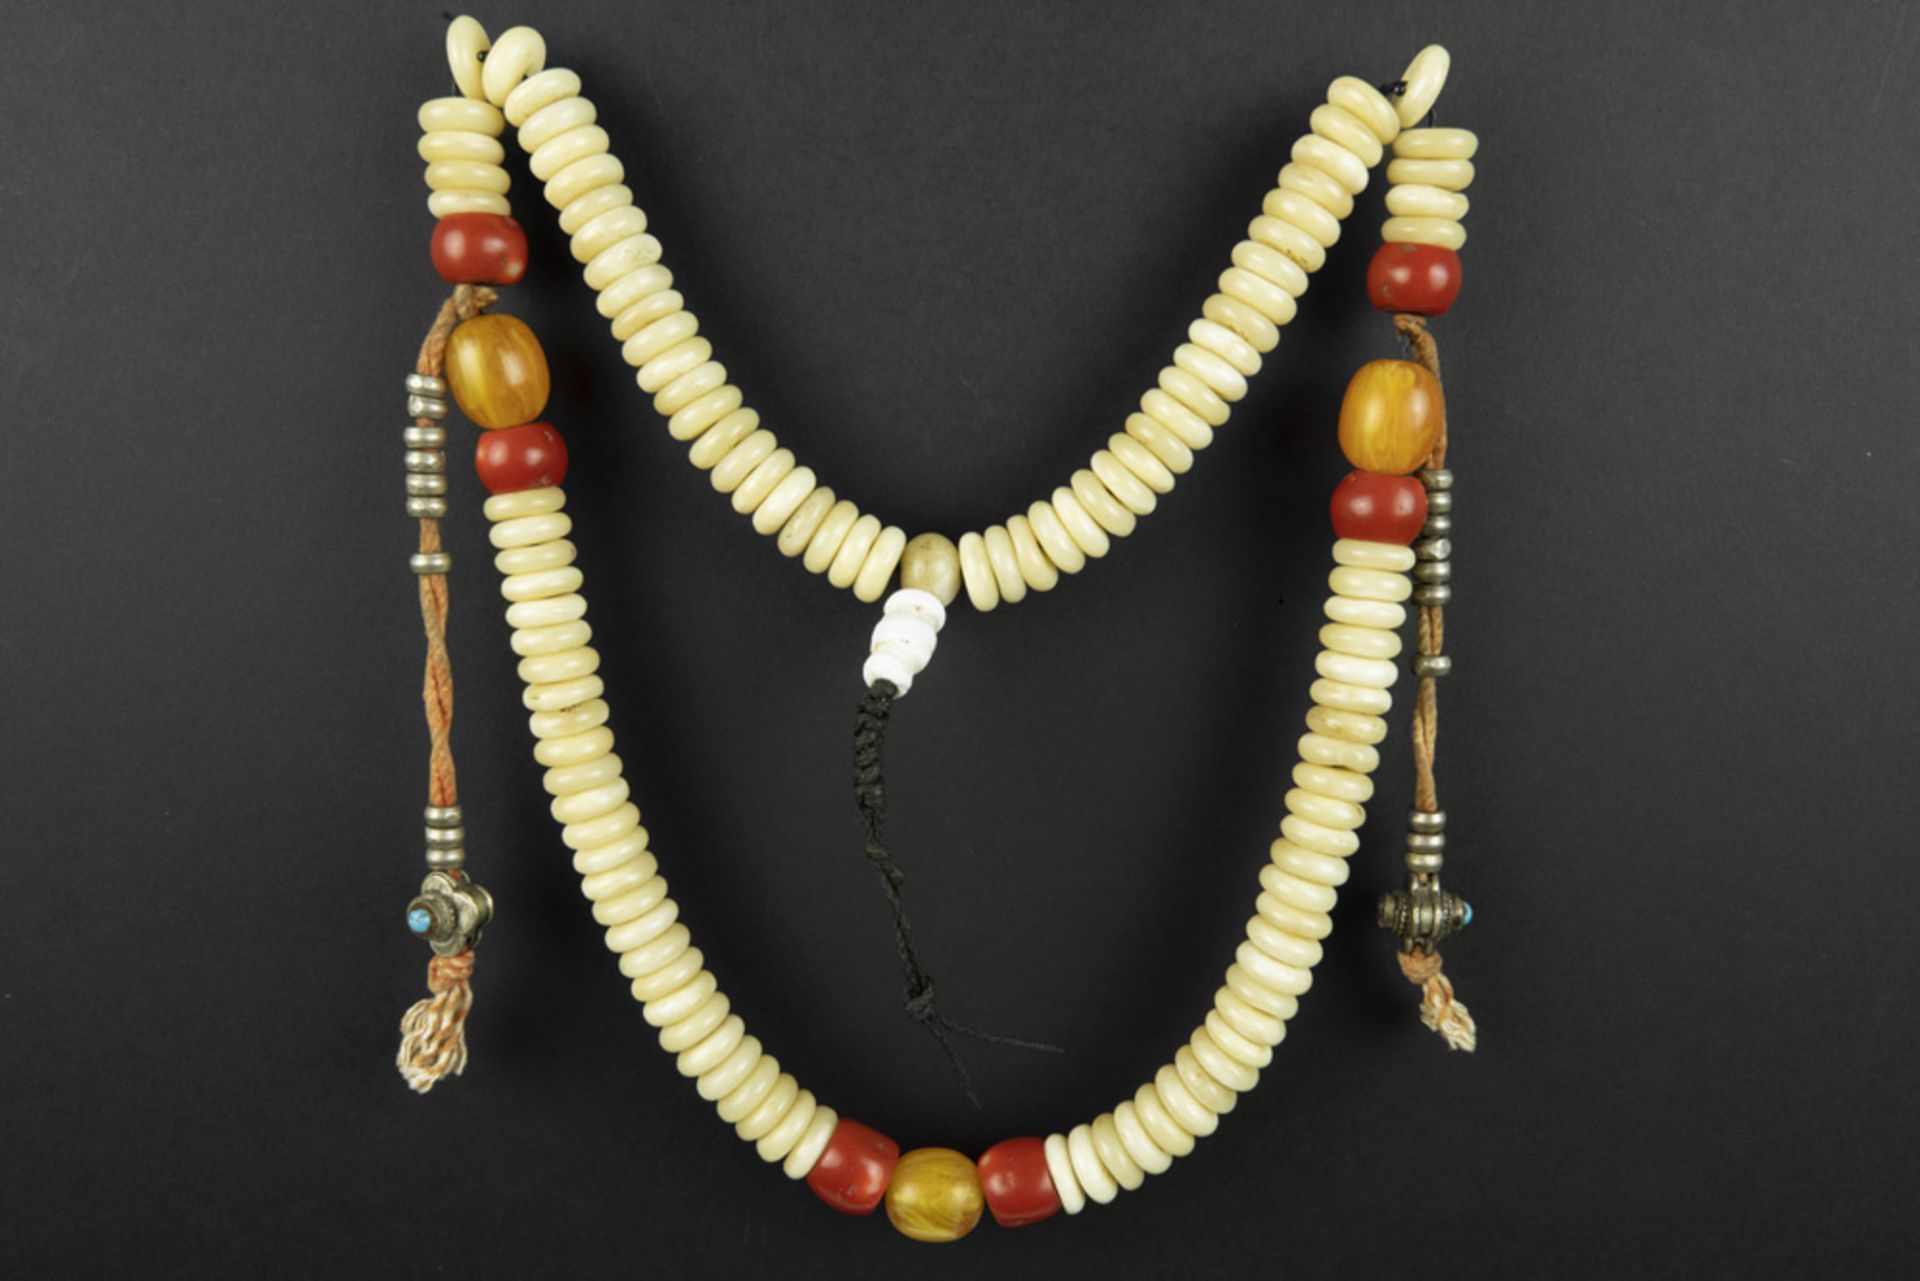 Himalayan "mala" with beads in carnelian, amber, shell and silver || Zgn "mala" (gebedssnoer) uit de